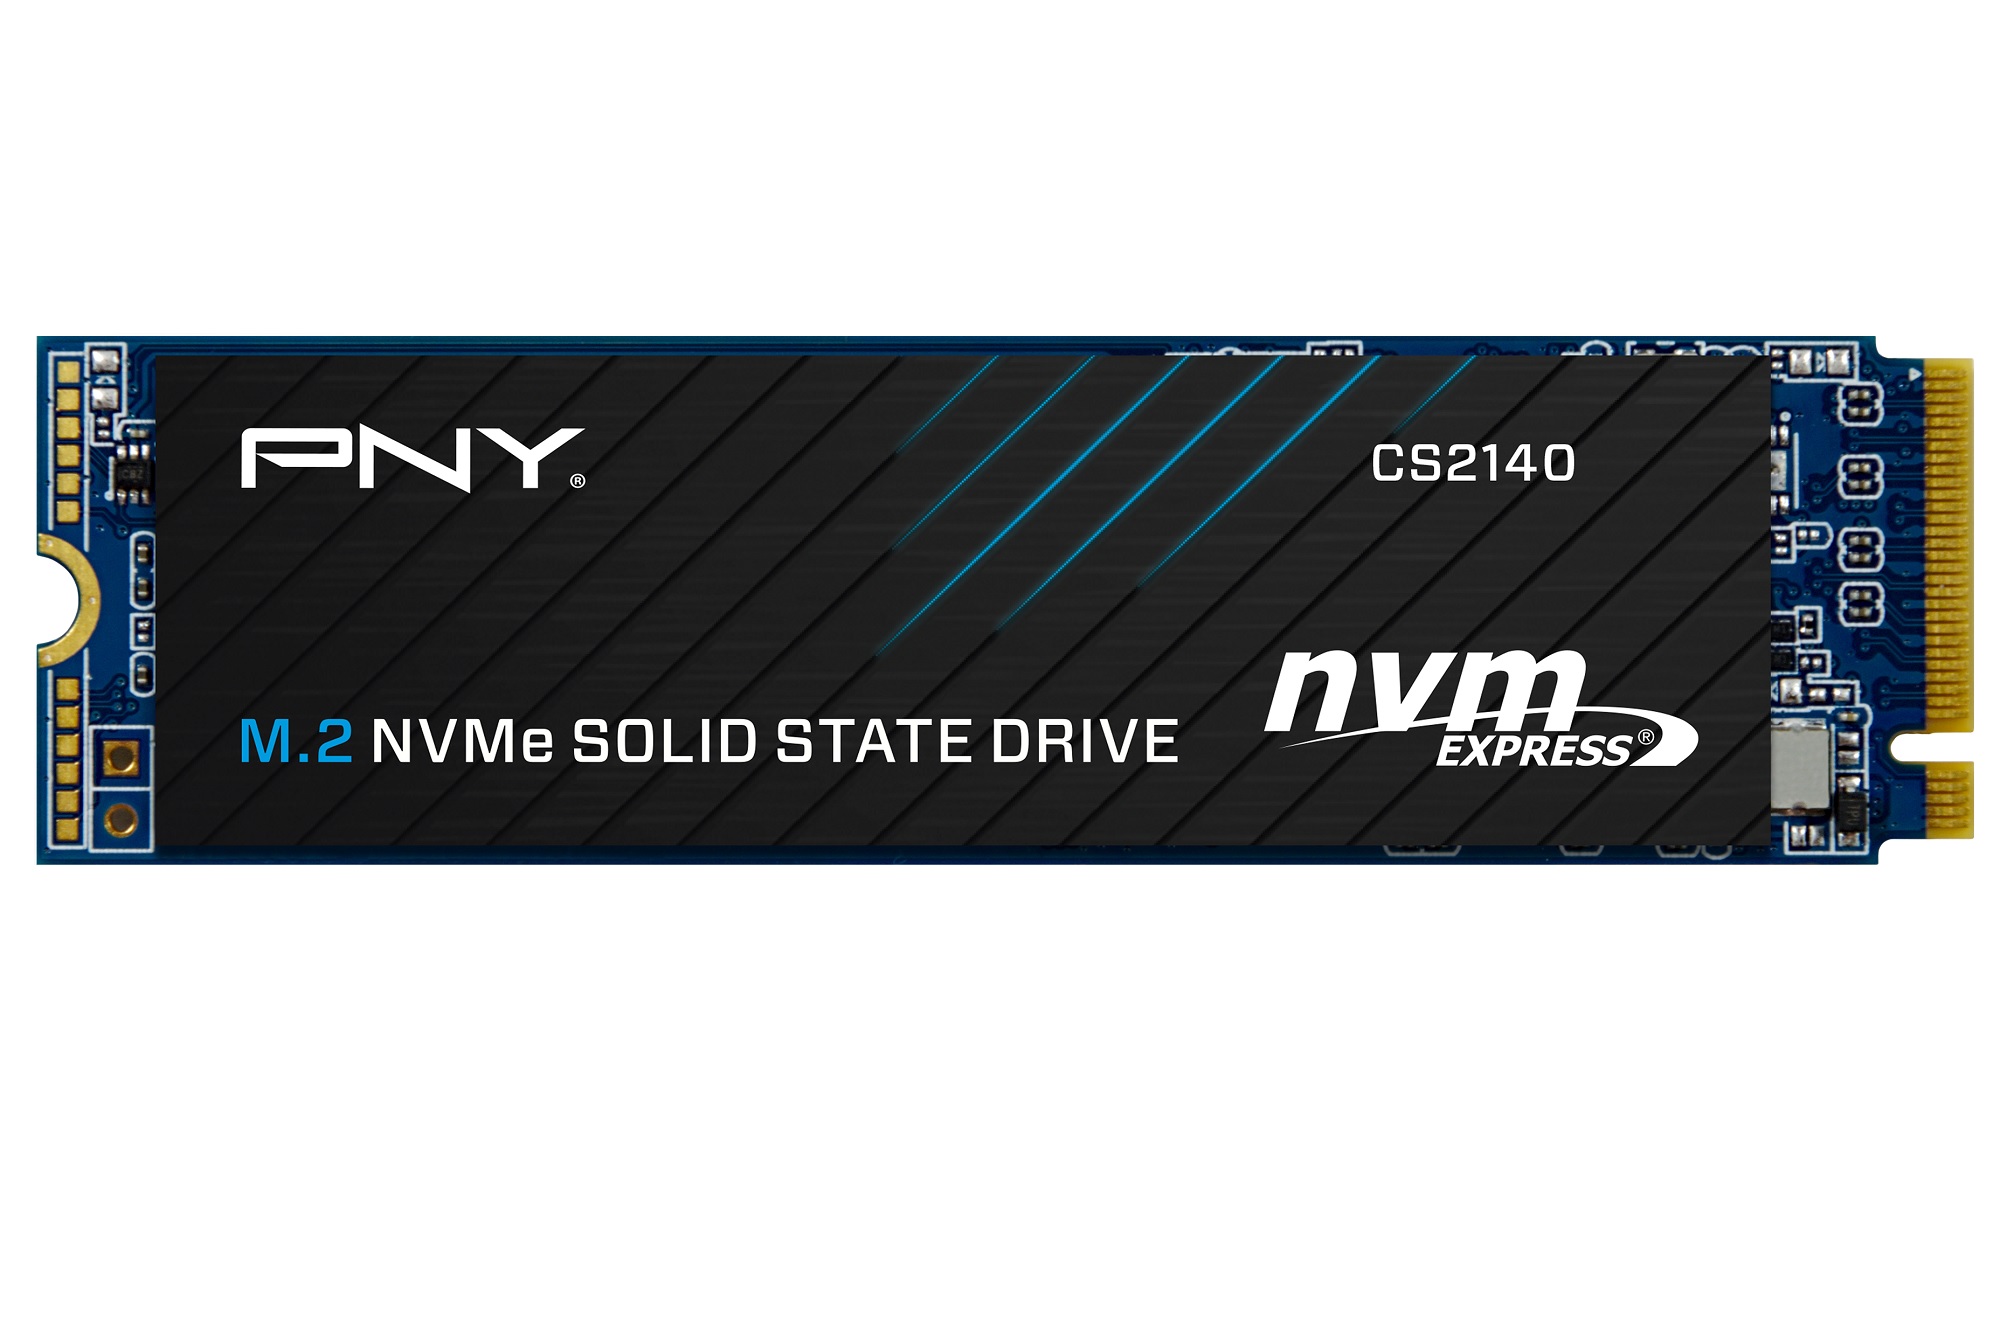 PNY CS2140 - Best PCIe 3.0 NVMe SSD